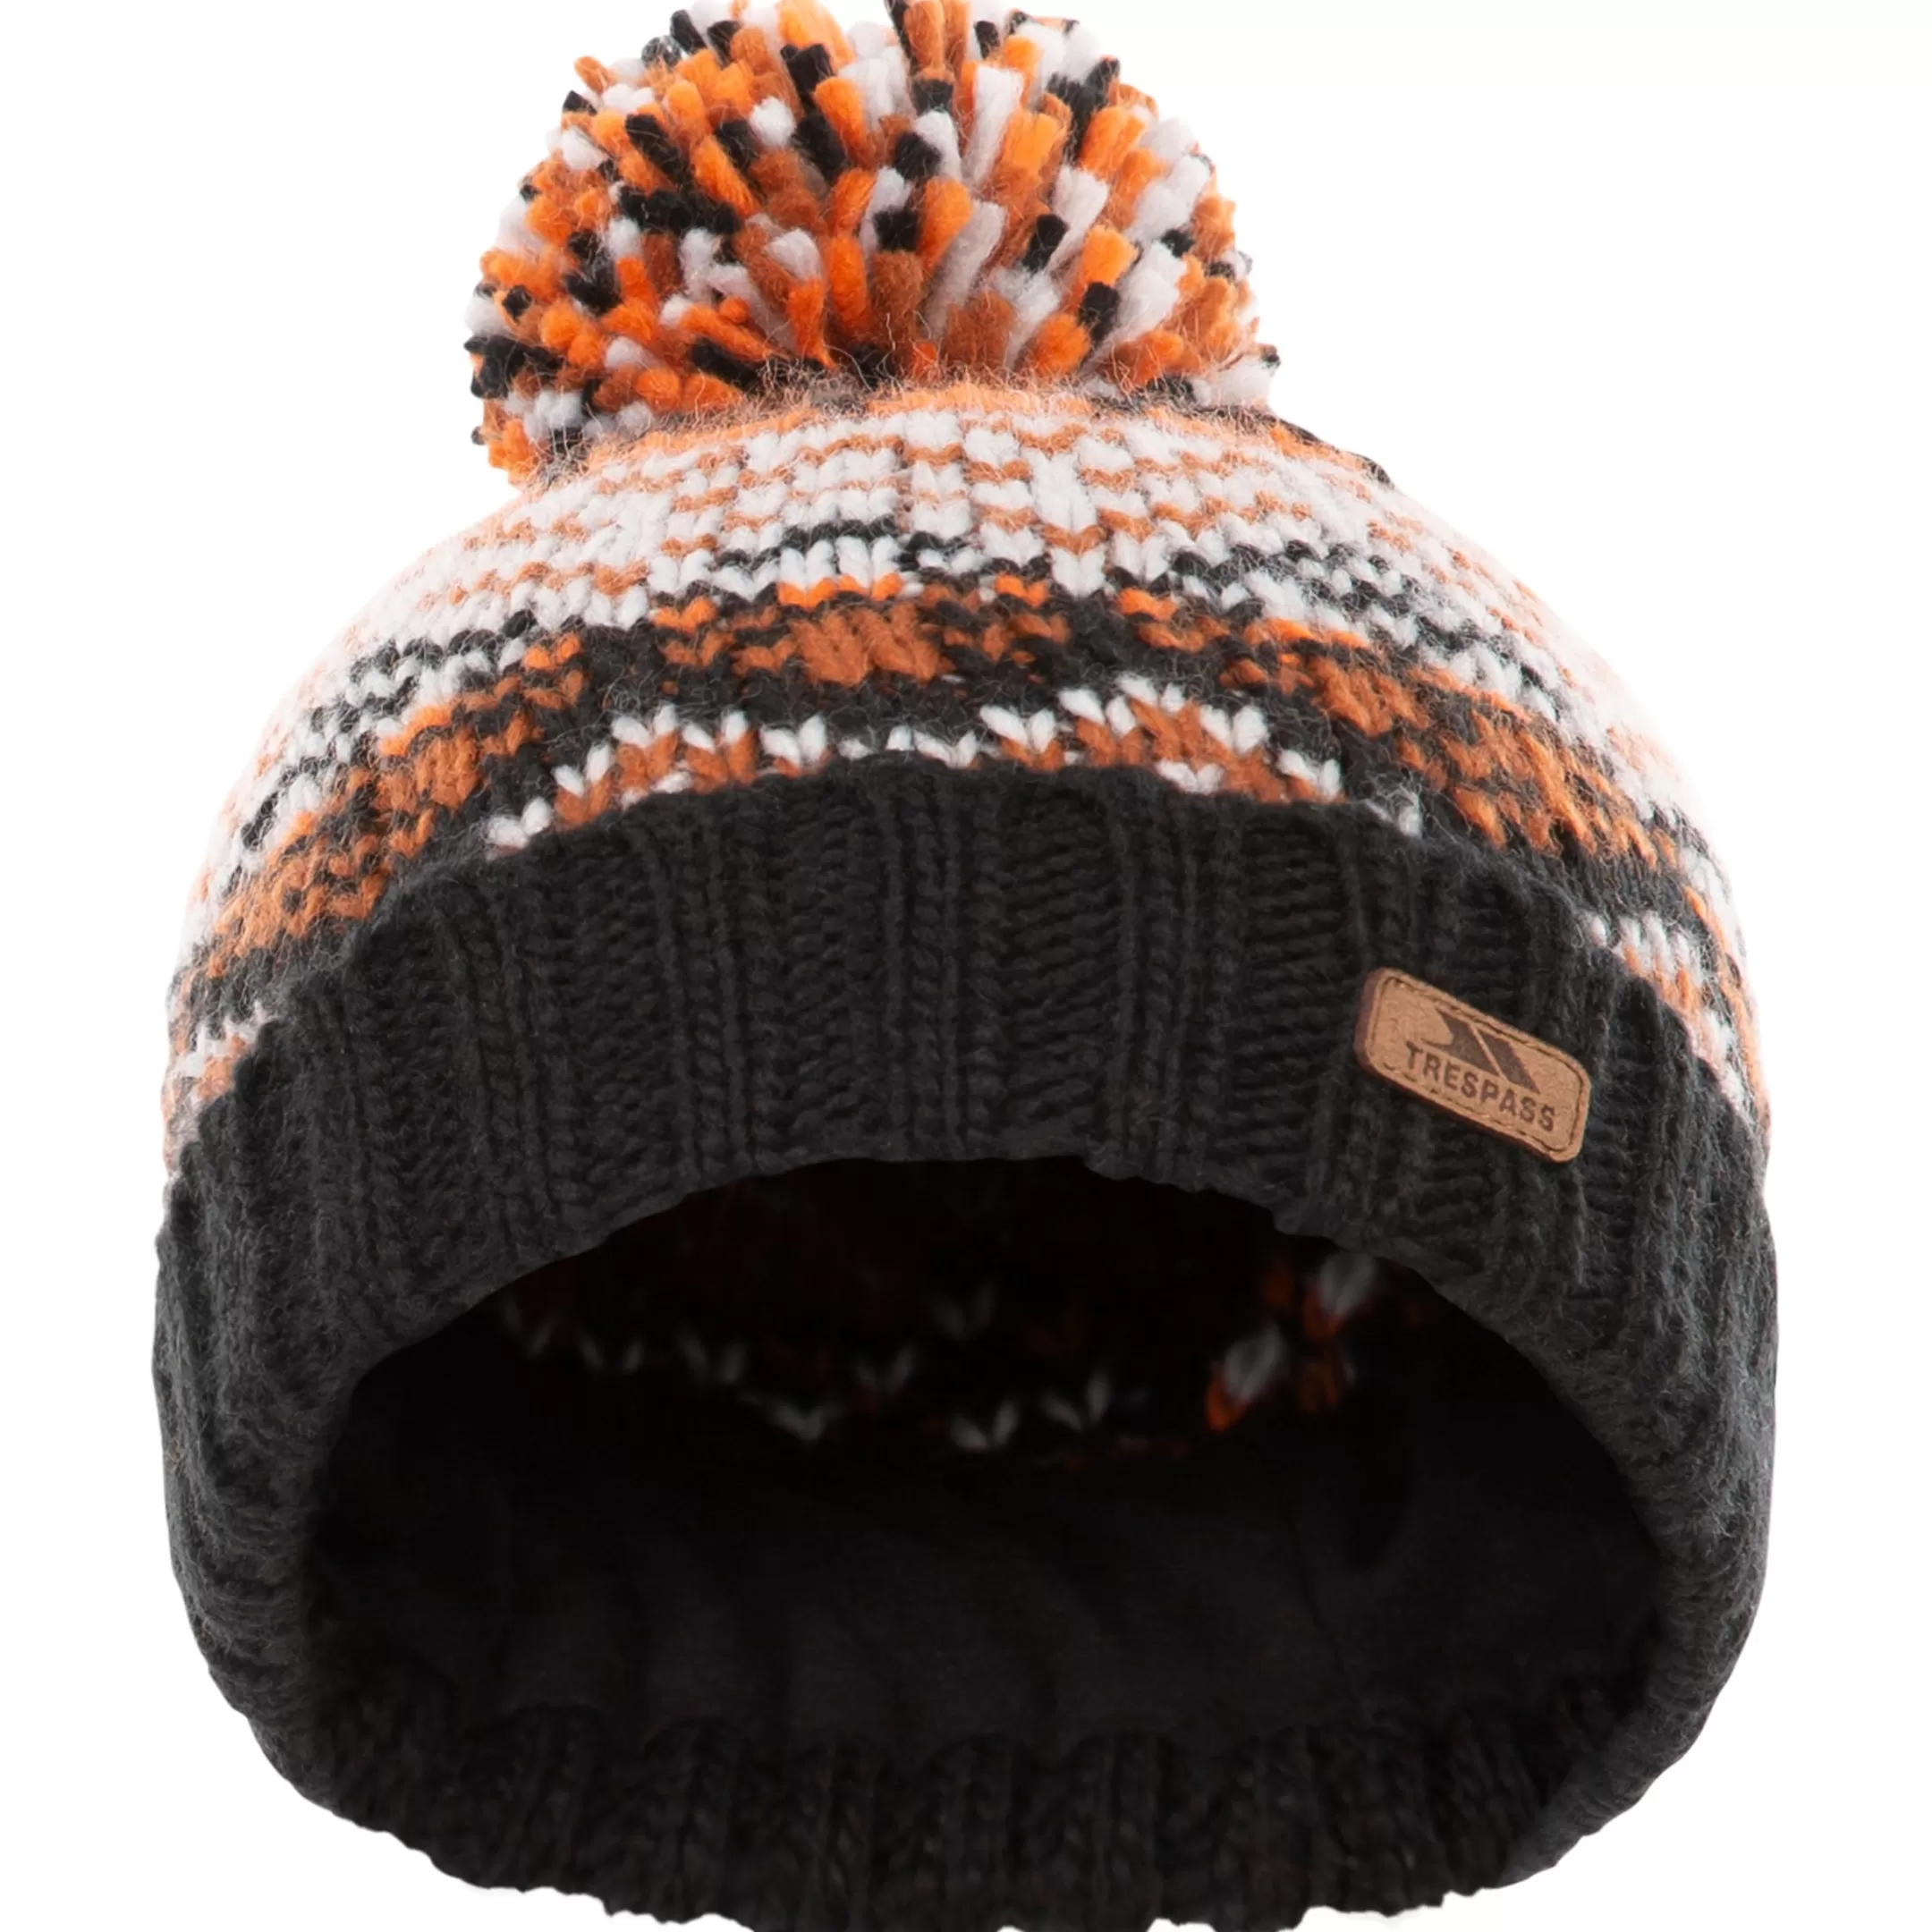 Kids' Patterned Bobble Hat Sprouse | Trespass Sale